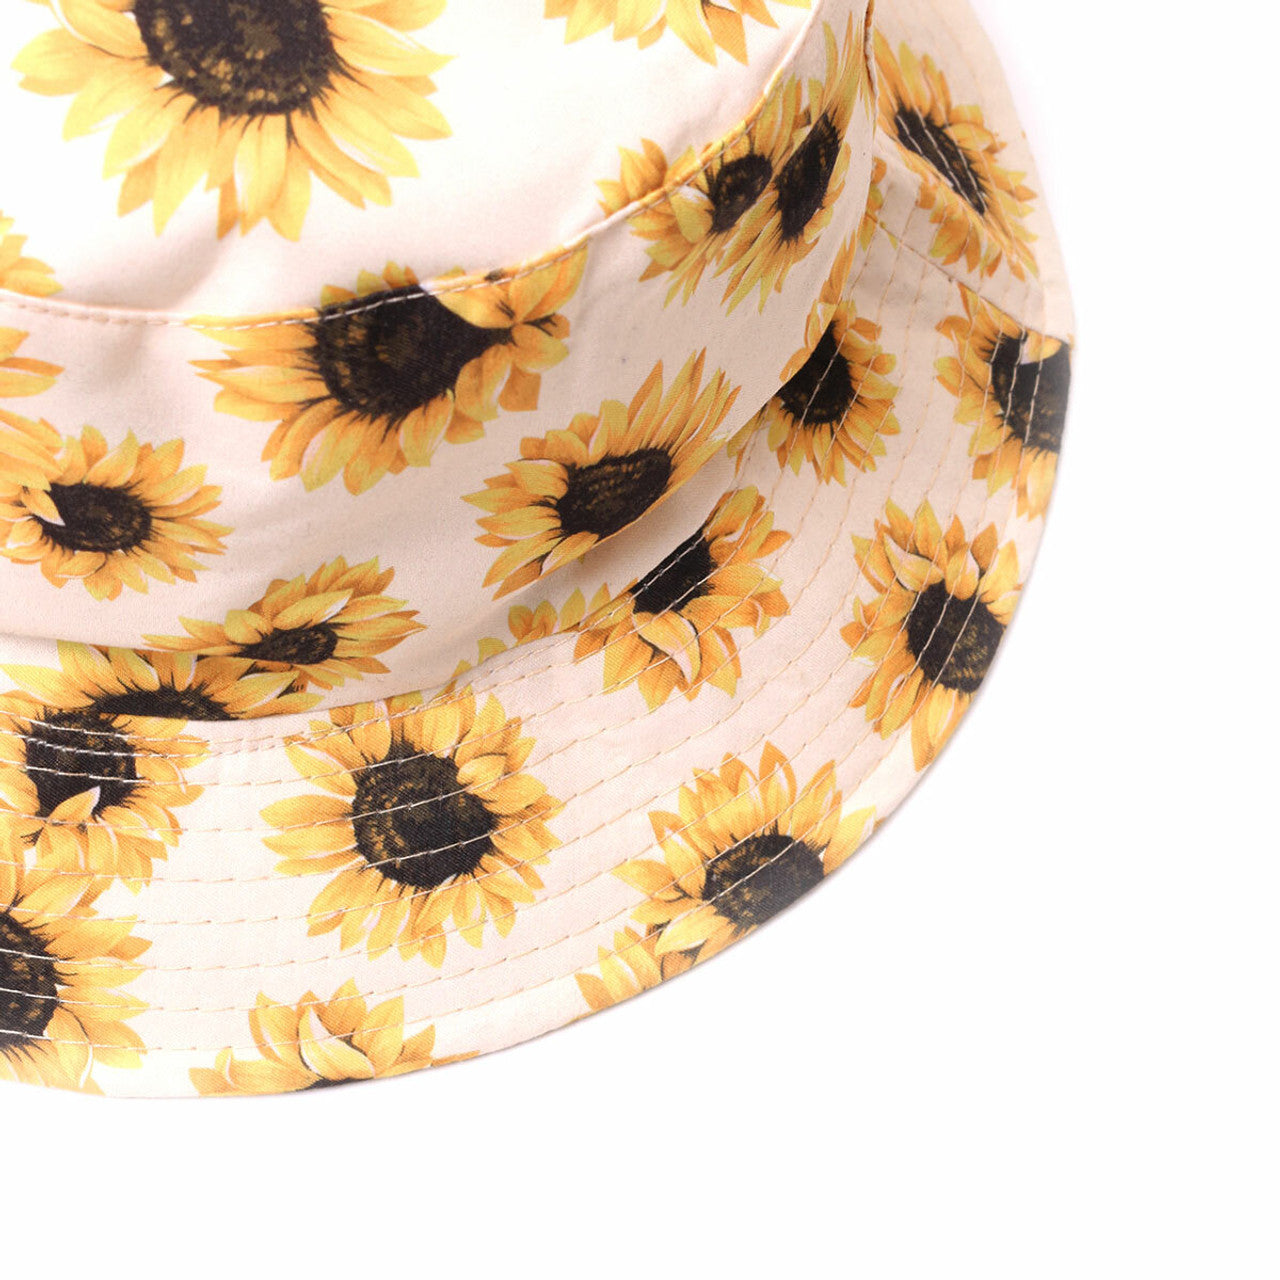 Nollia Sunflower Bucket Hat - Beige Solsikke Bøllehat - Bucket Hat fra Nollia hos The Prince Webshop